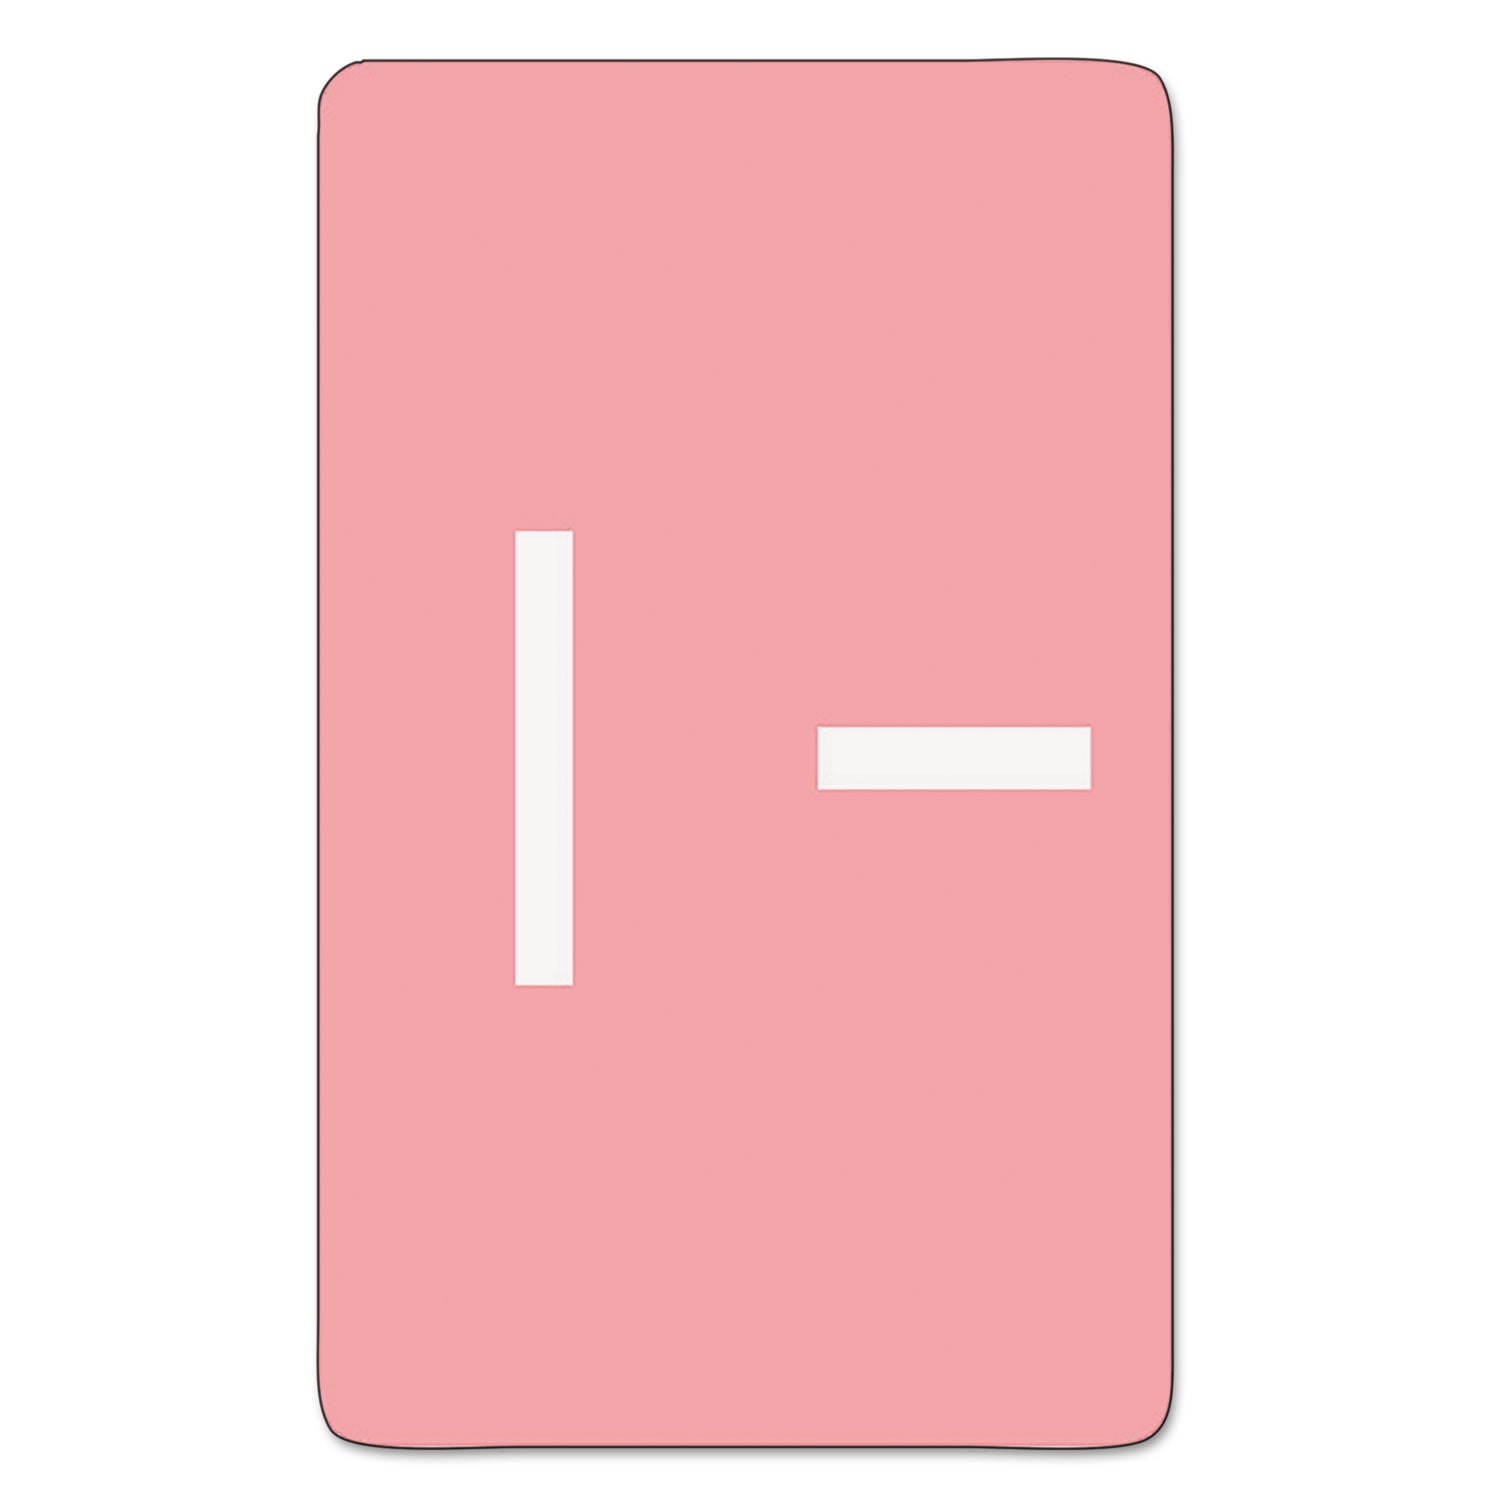 AlphaZ Color-Coded Second Letter Alphabetical Labels, I, 1 x 1.63, Pink, 10/Sheet, 10 Sheets/Pack - 